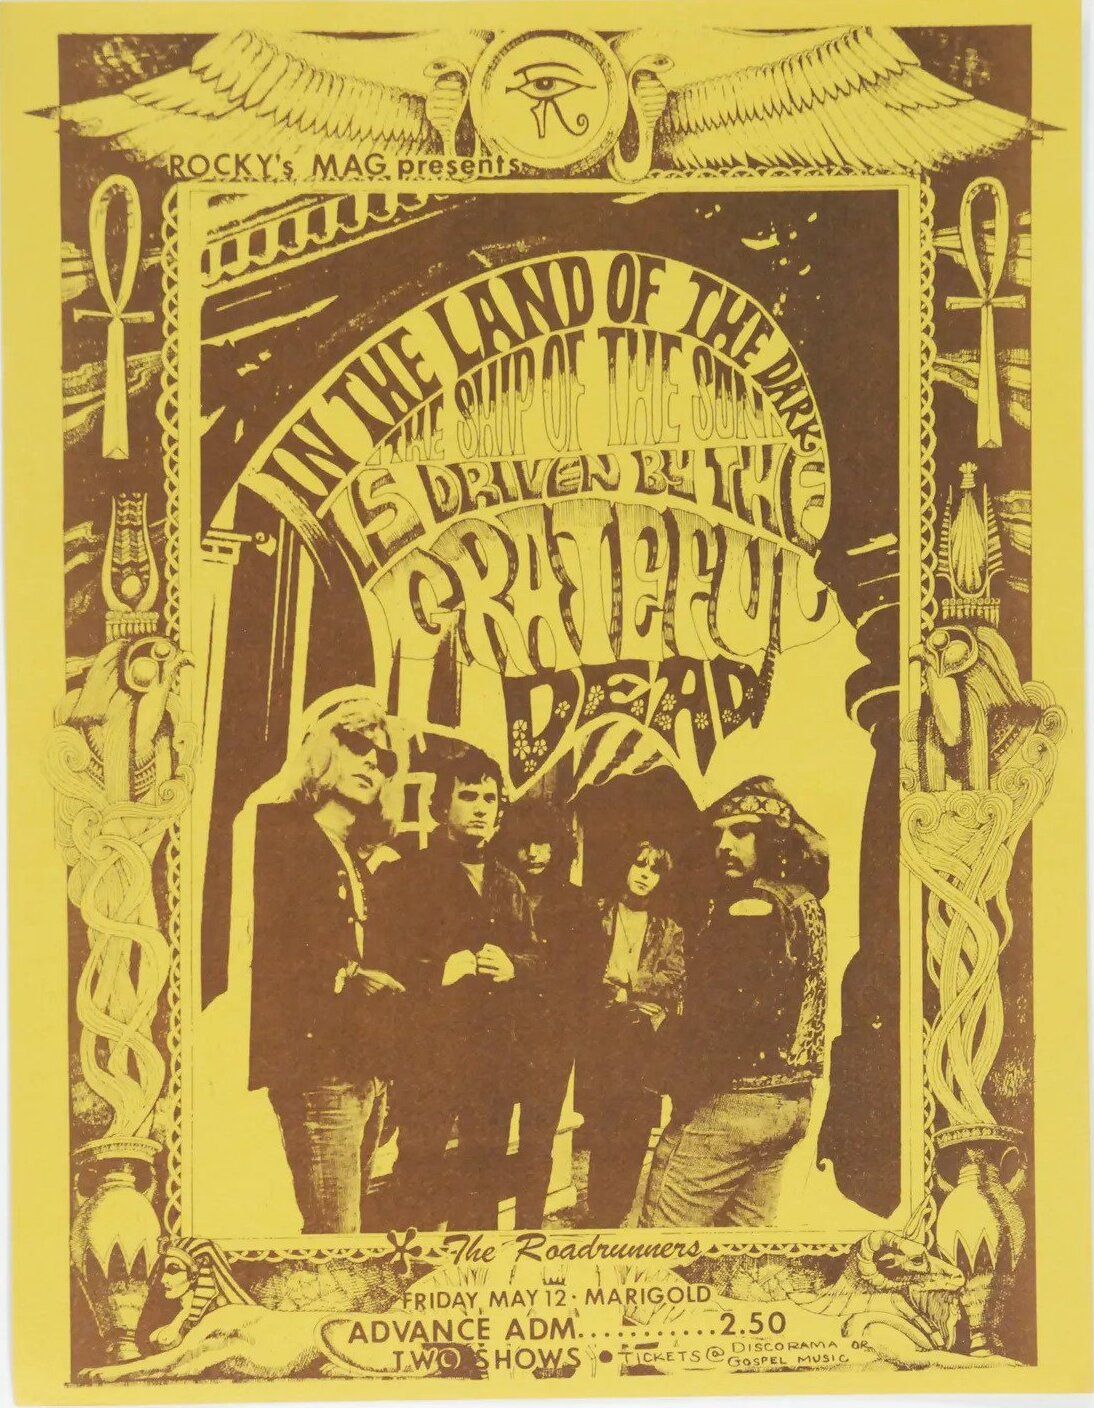 Grateful Dead Marigold Ballroom 1967 Concert Poster